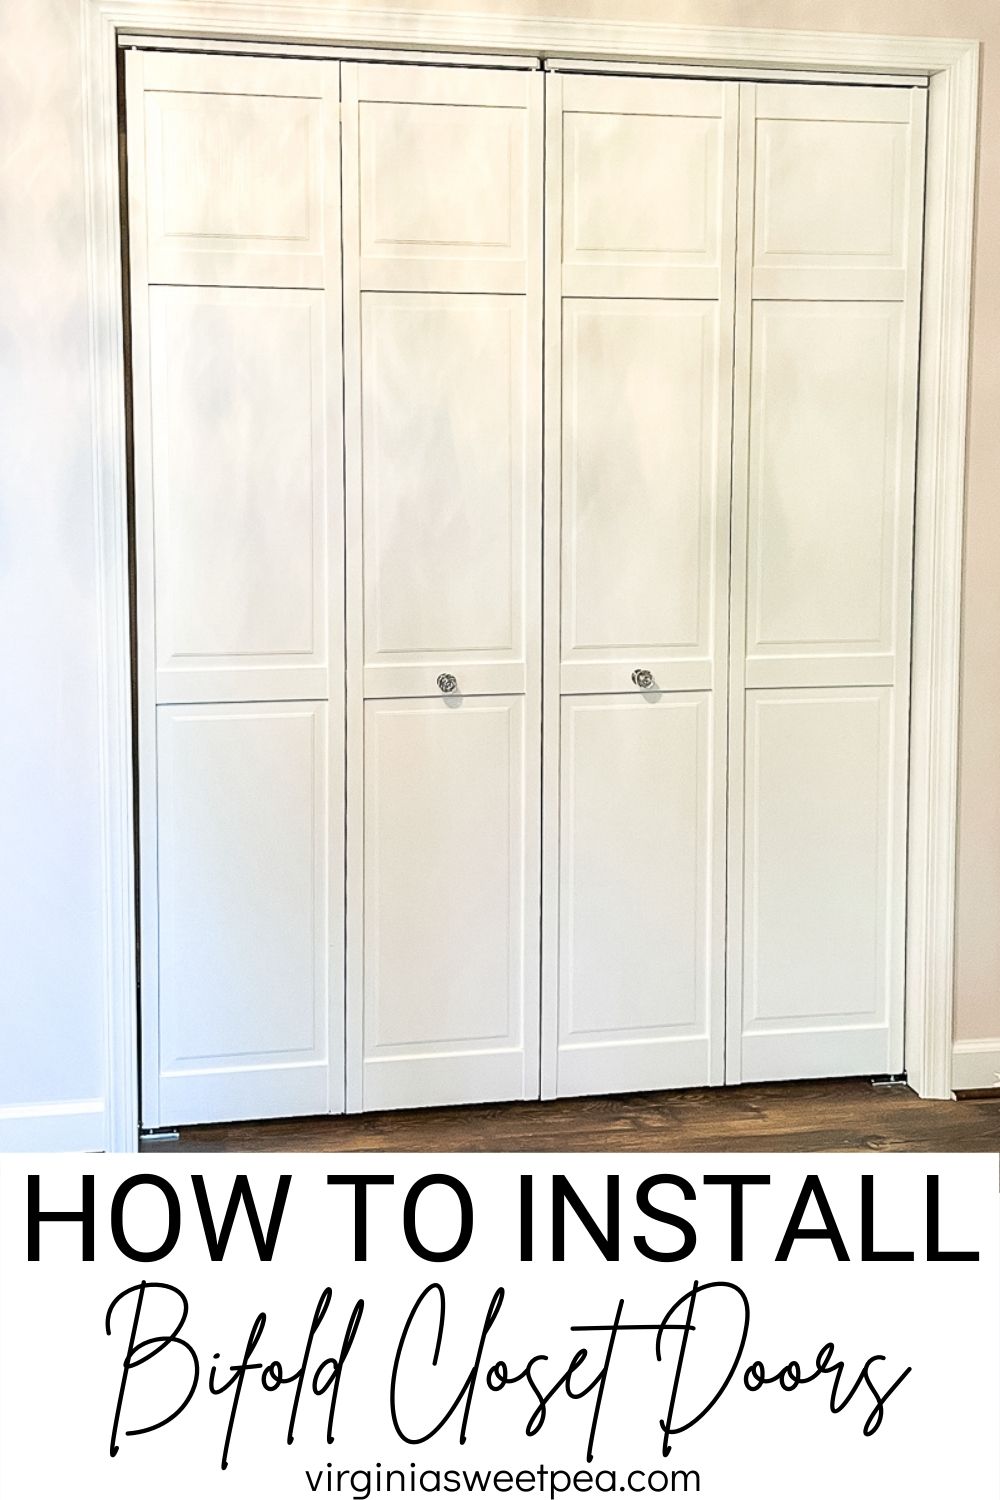 https://www.virginiasweetpea.com/wp-content/uploads/2021/05/How-to-Install-Bifold-Closet-Doors-1.jpg